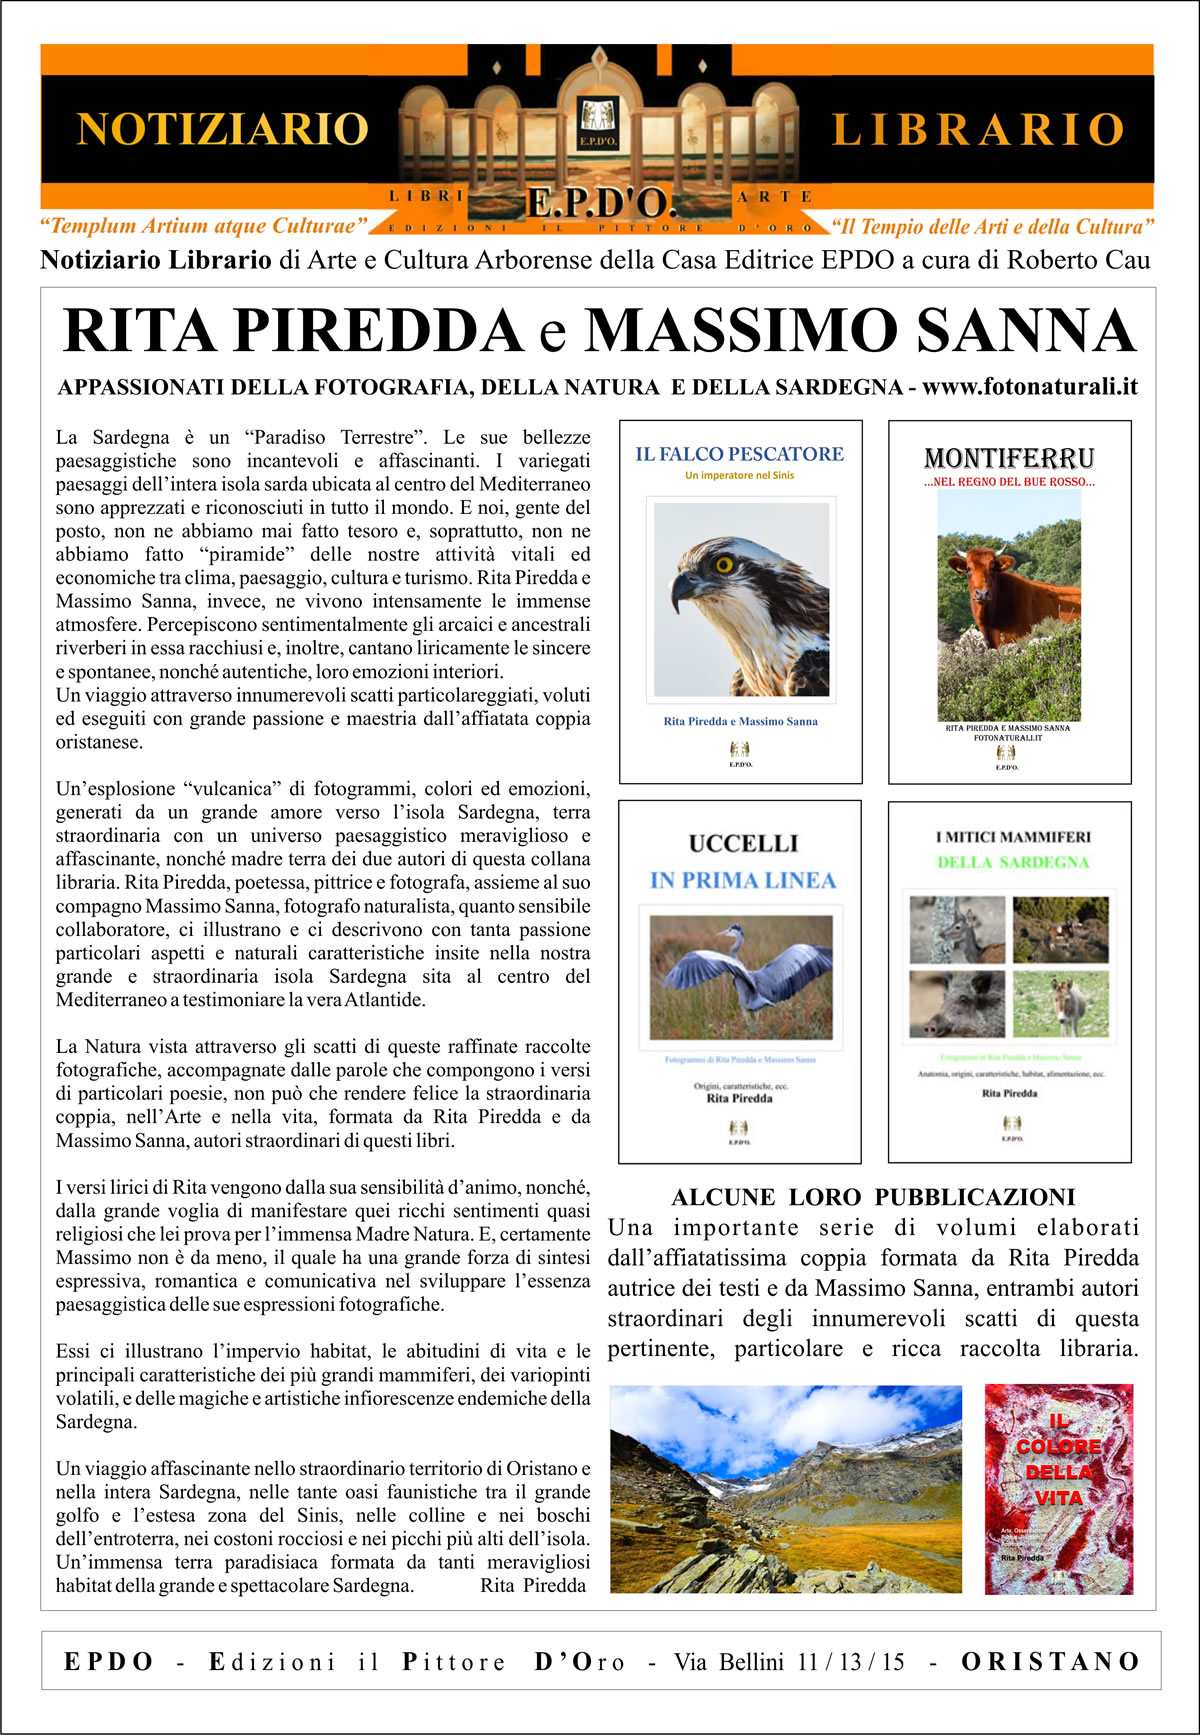 Notiziario Librairio EPDO - Rita Piredda e Massimo Sanna